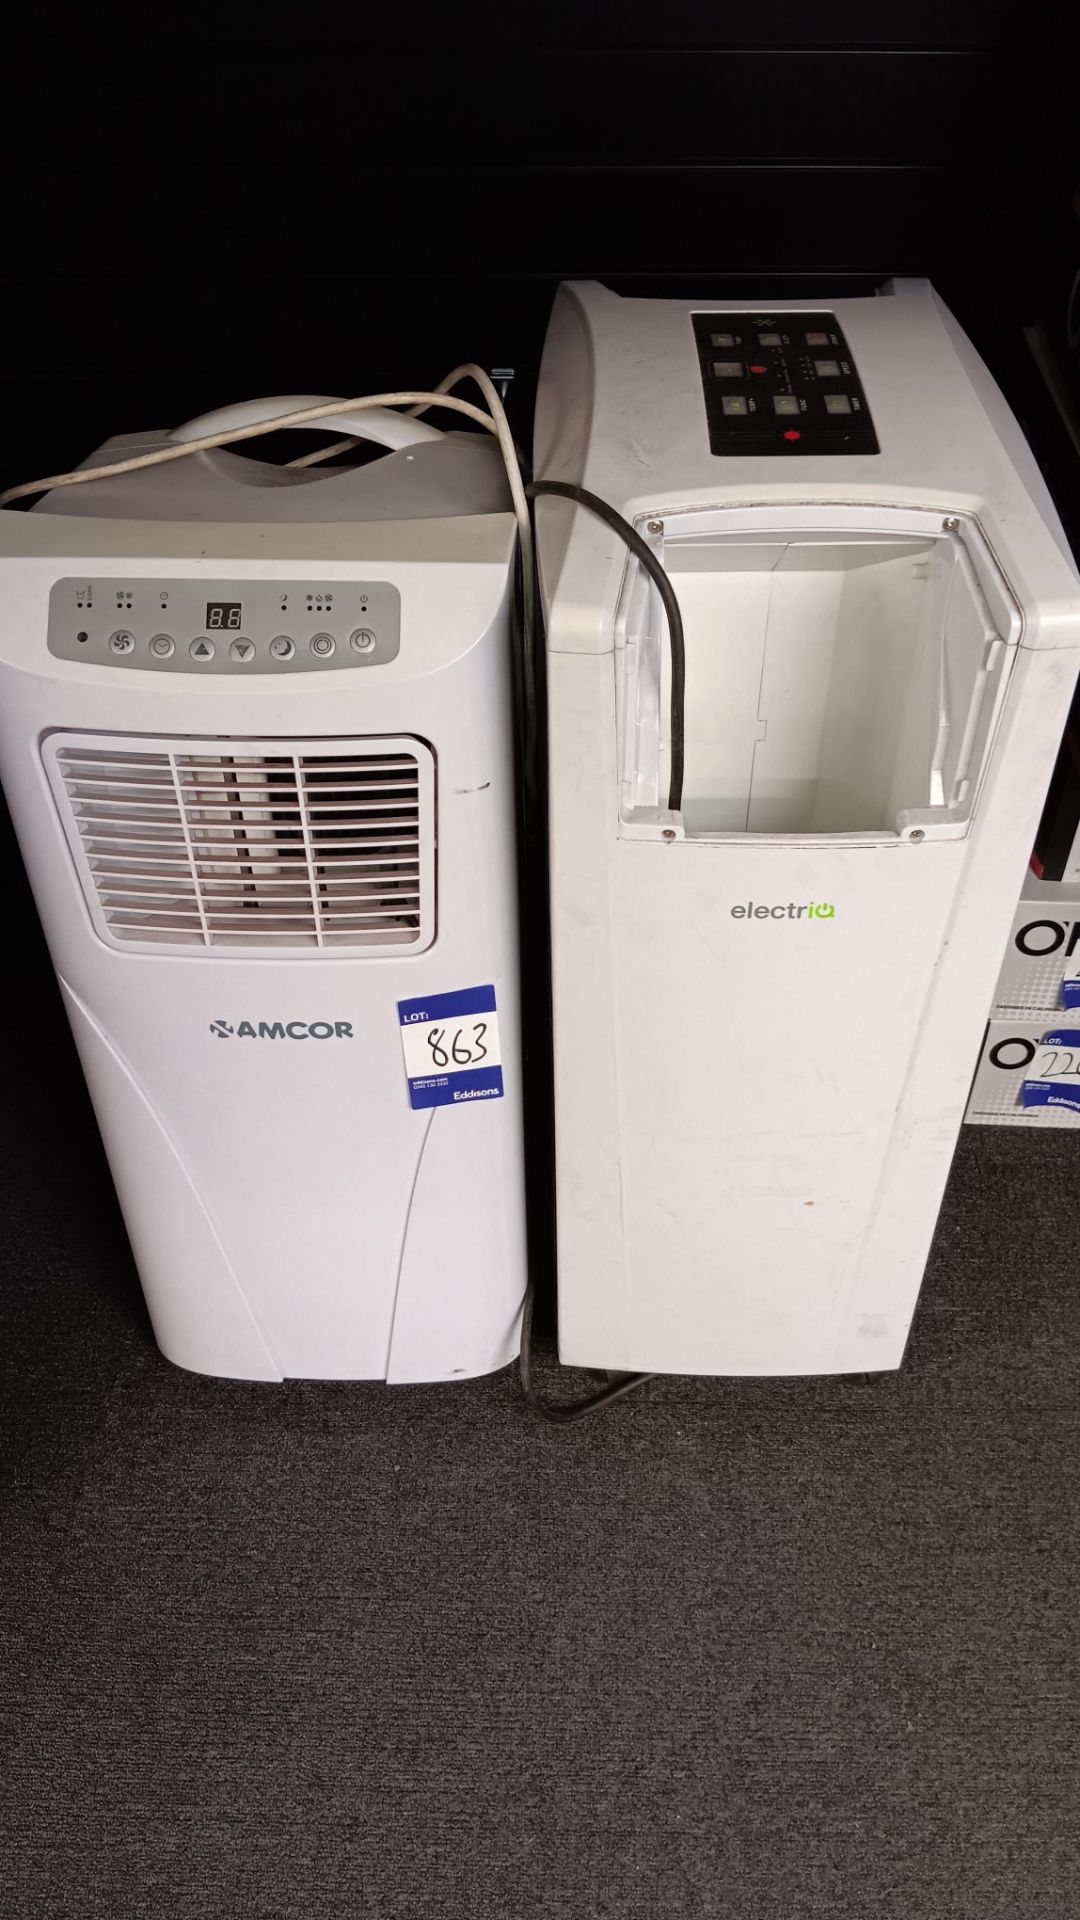 Amcor mobile air conditioning unit & Electriq mobile air condditioning unit